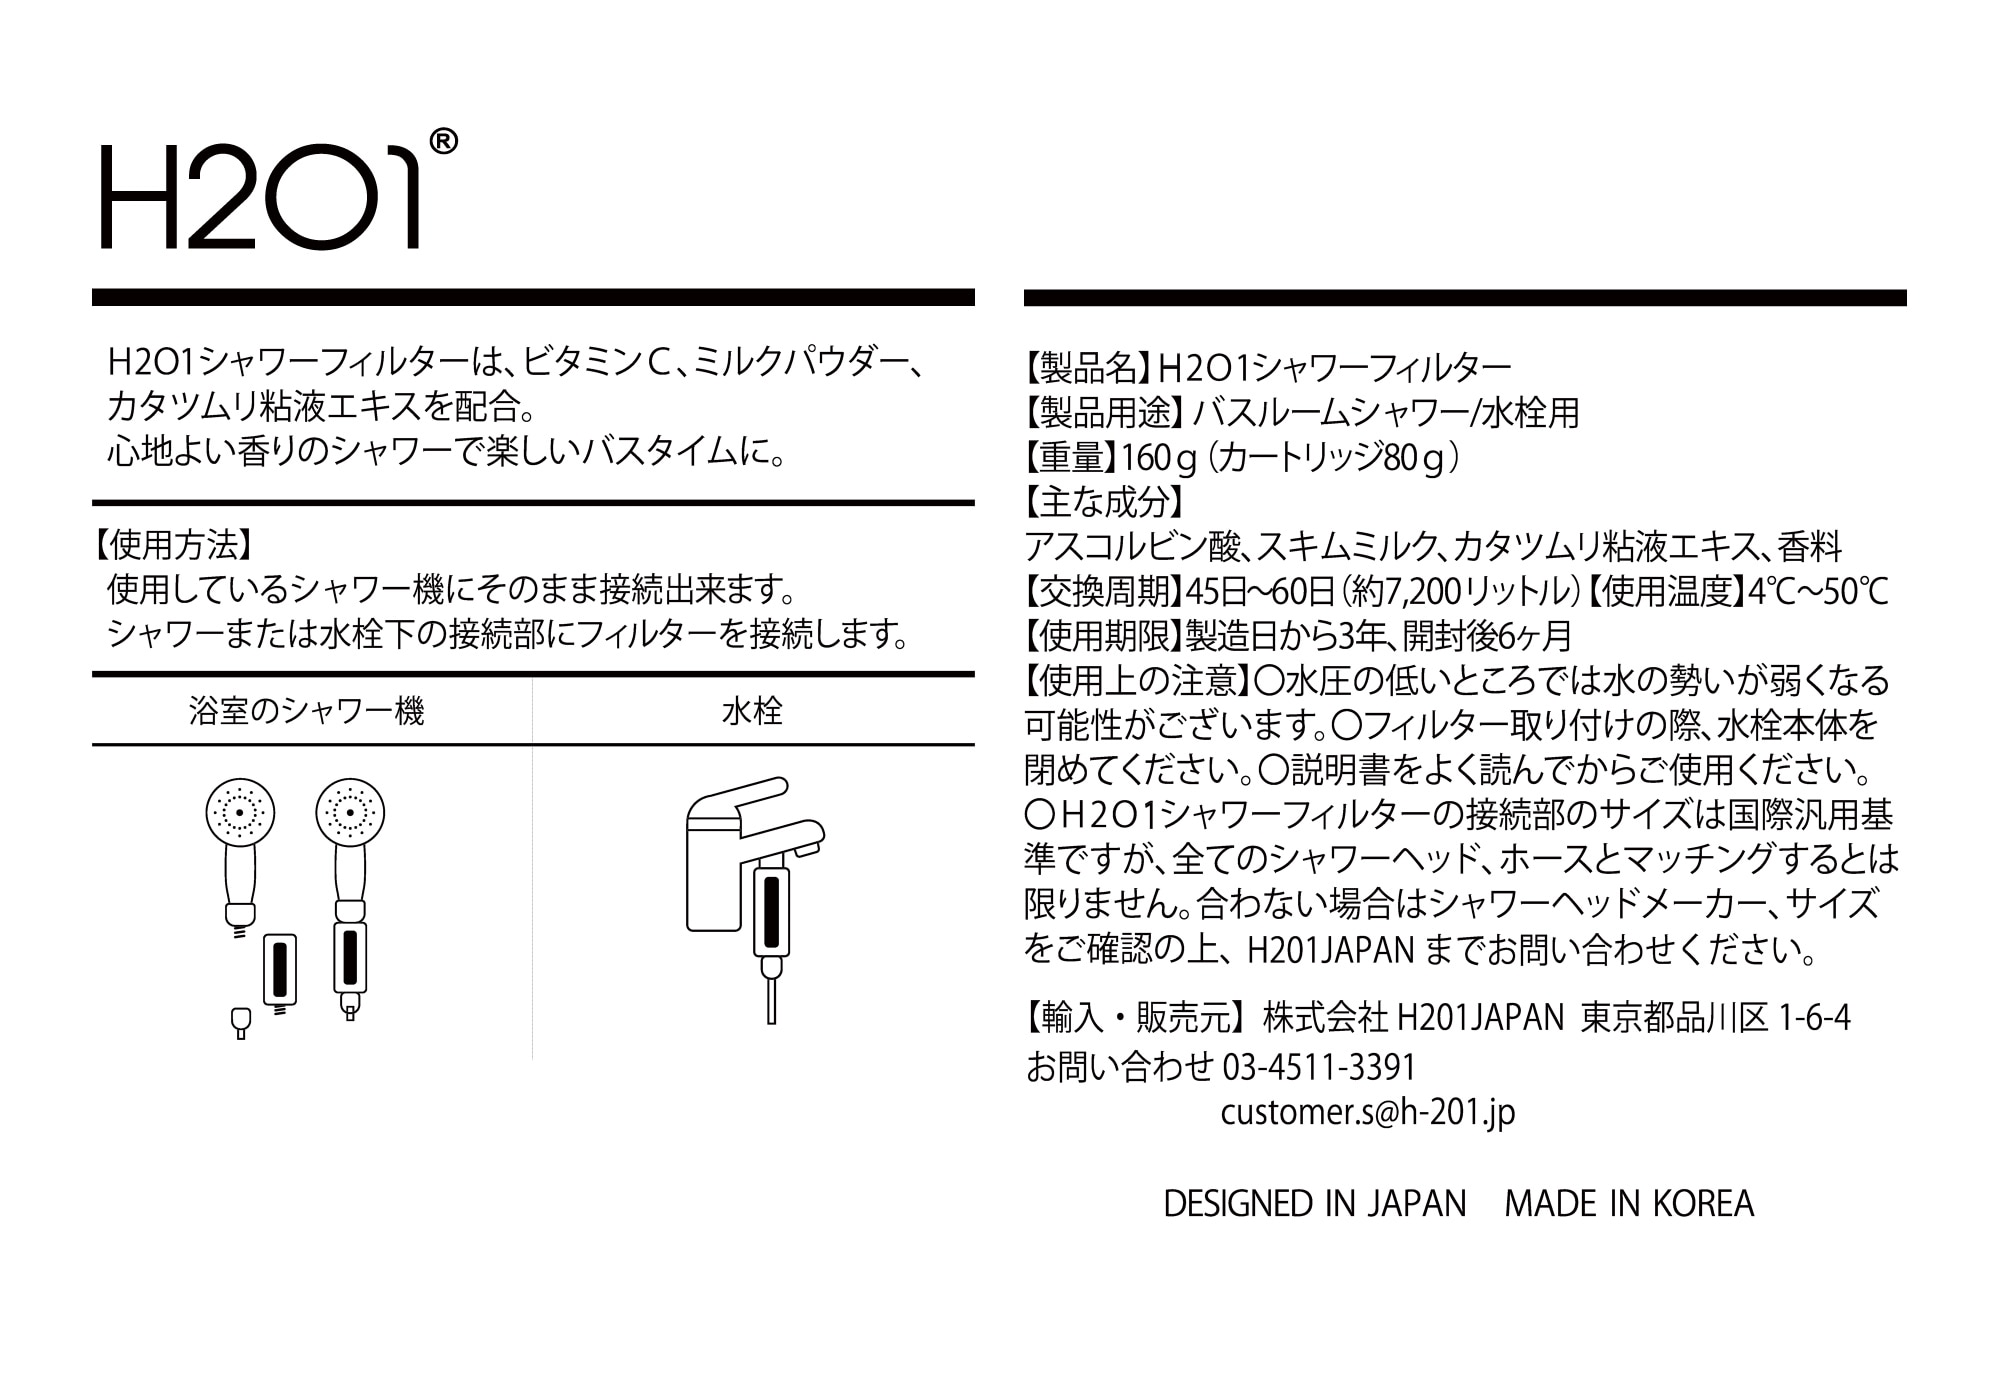 H201 シャワーフィルター 2個セット | Costco Japan